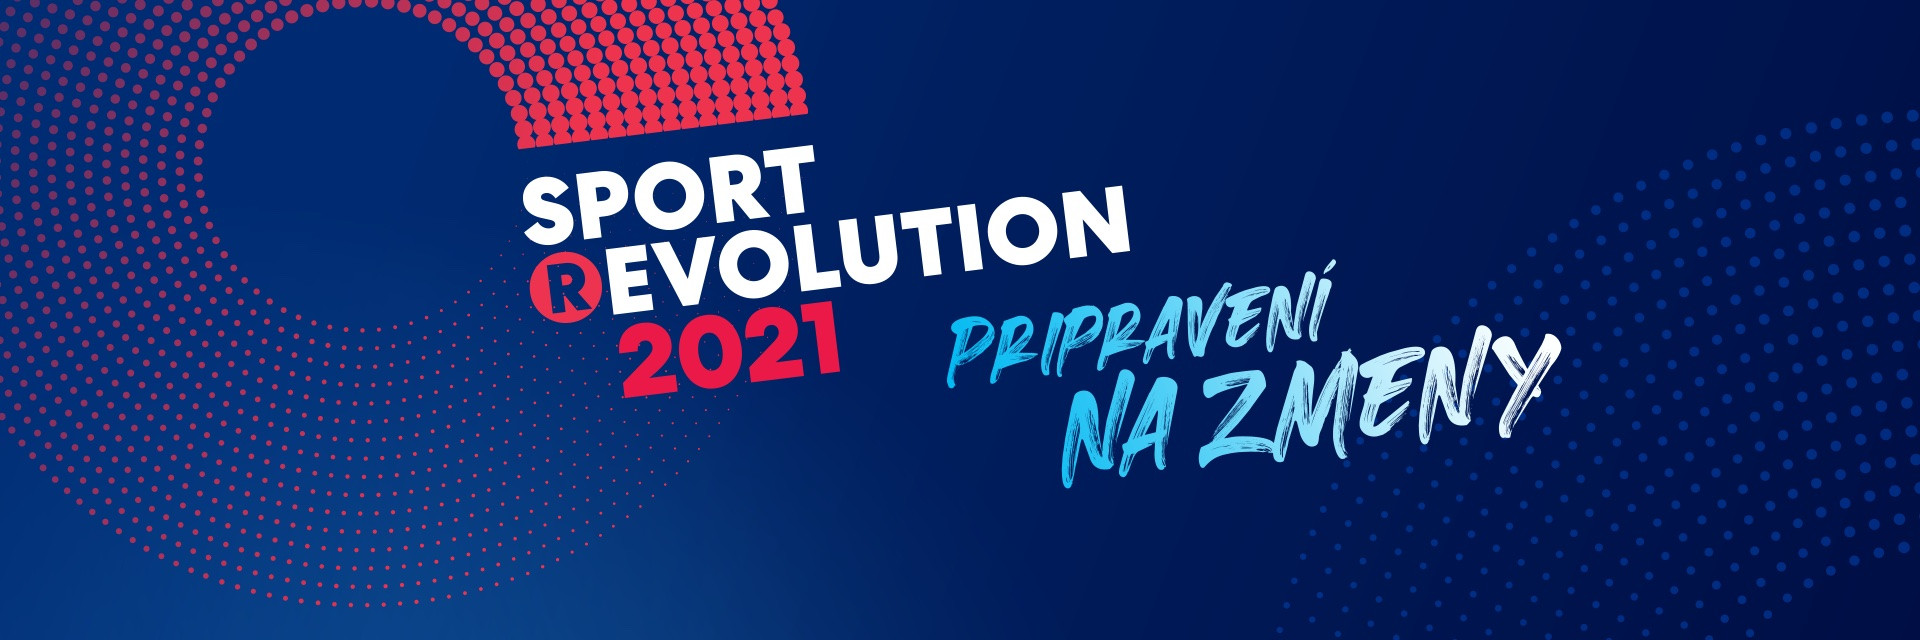 Sportrevolution 2021